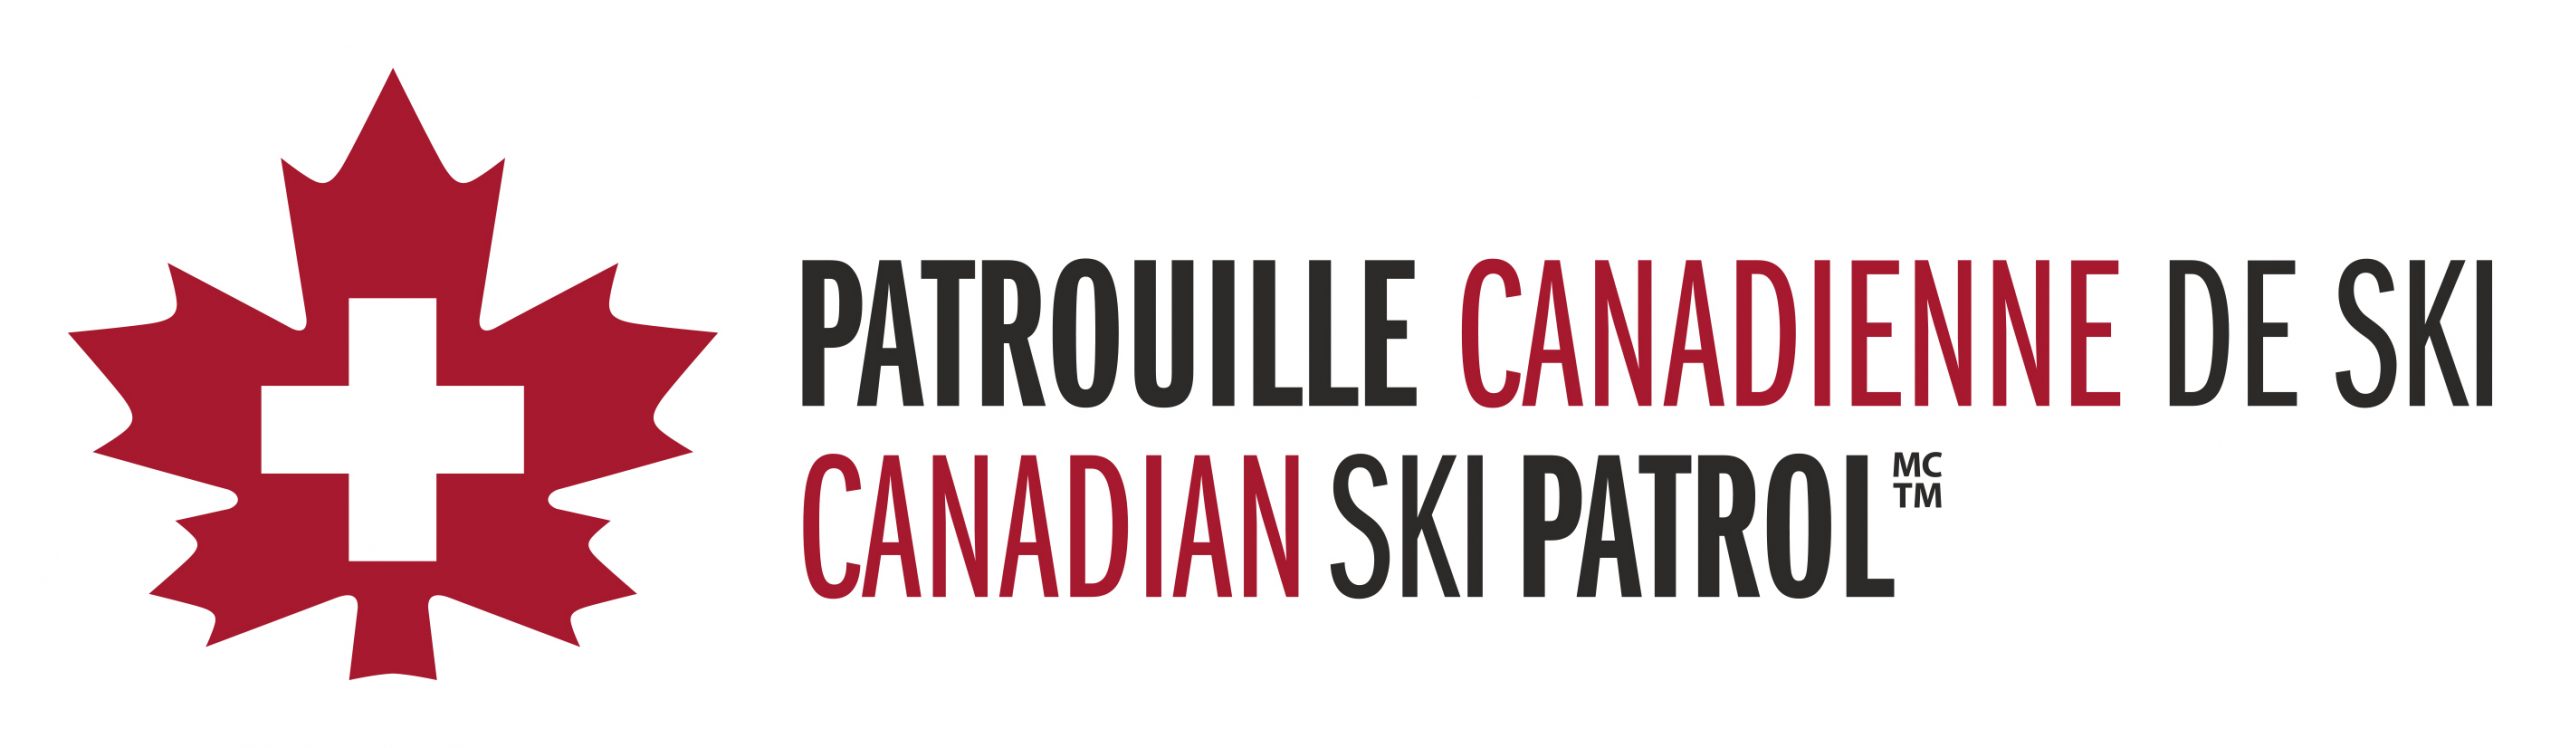 Patrouille Canadienne de ski 